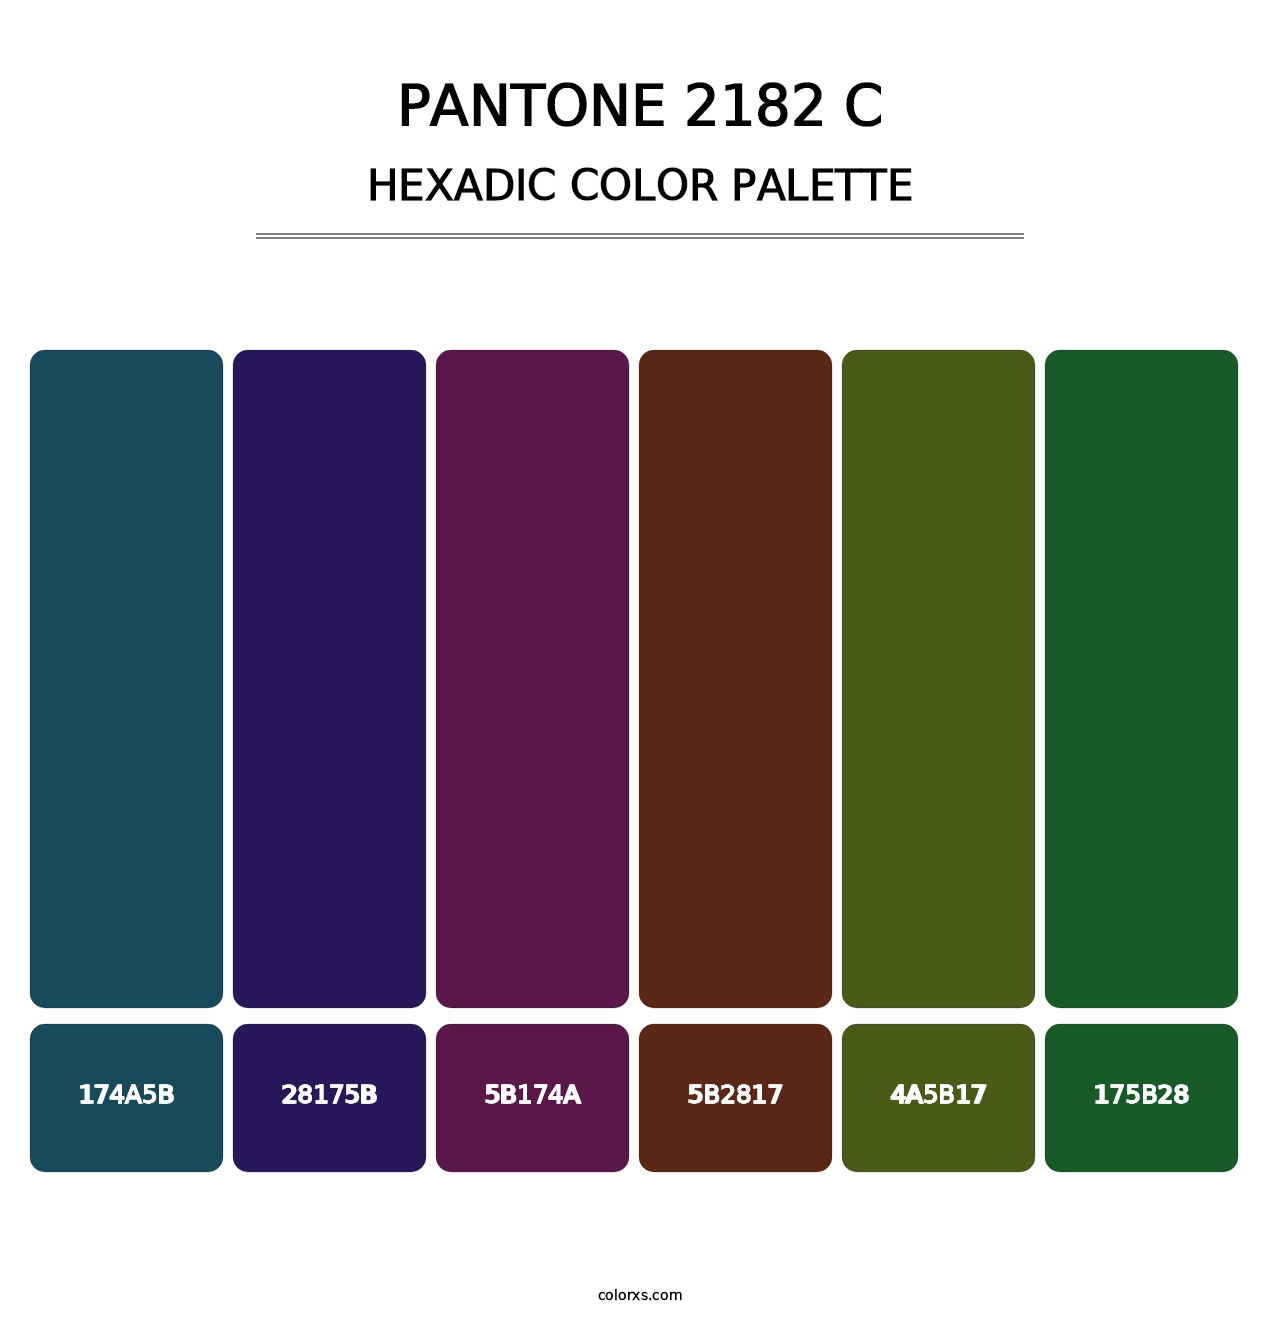 PANTONE 2182 C - Hexadic Color Palette